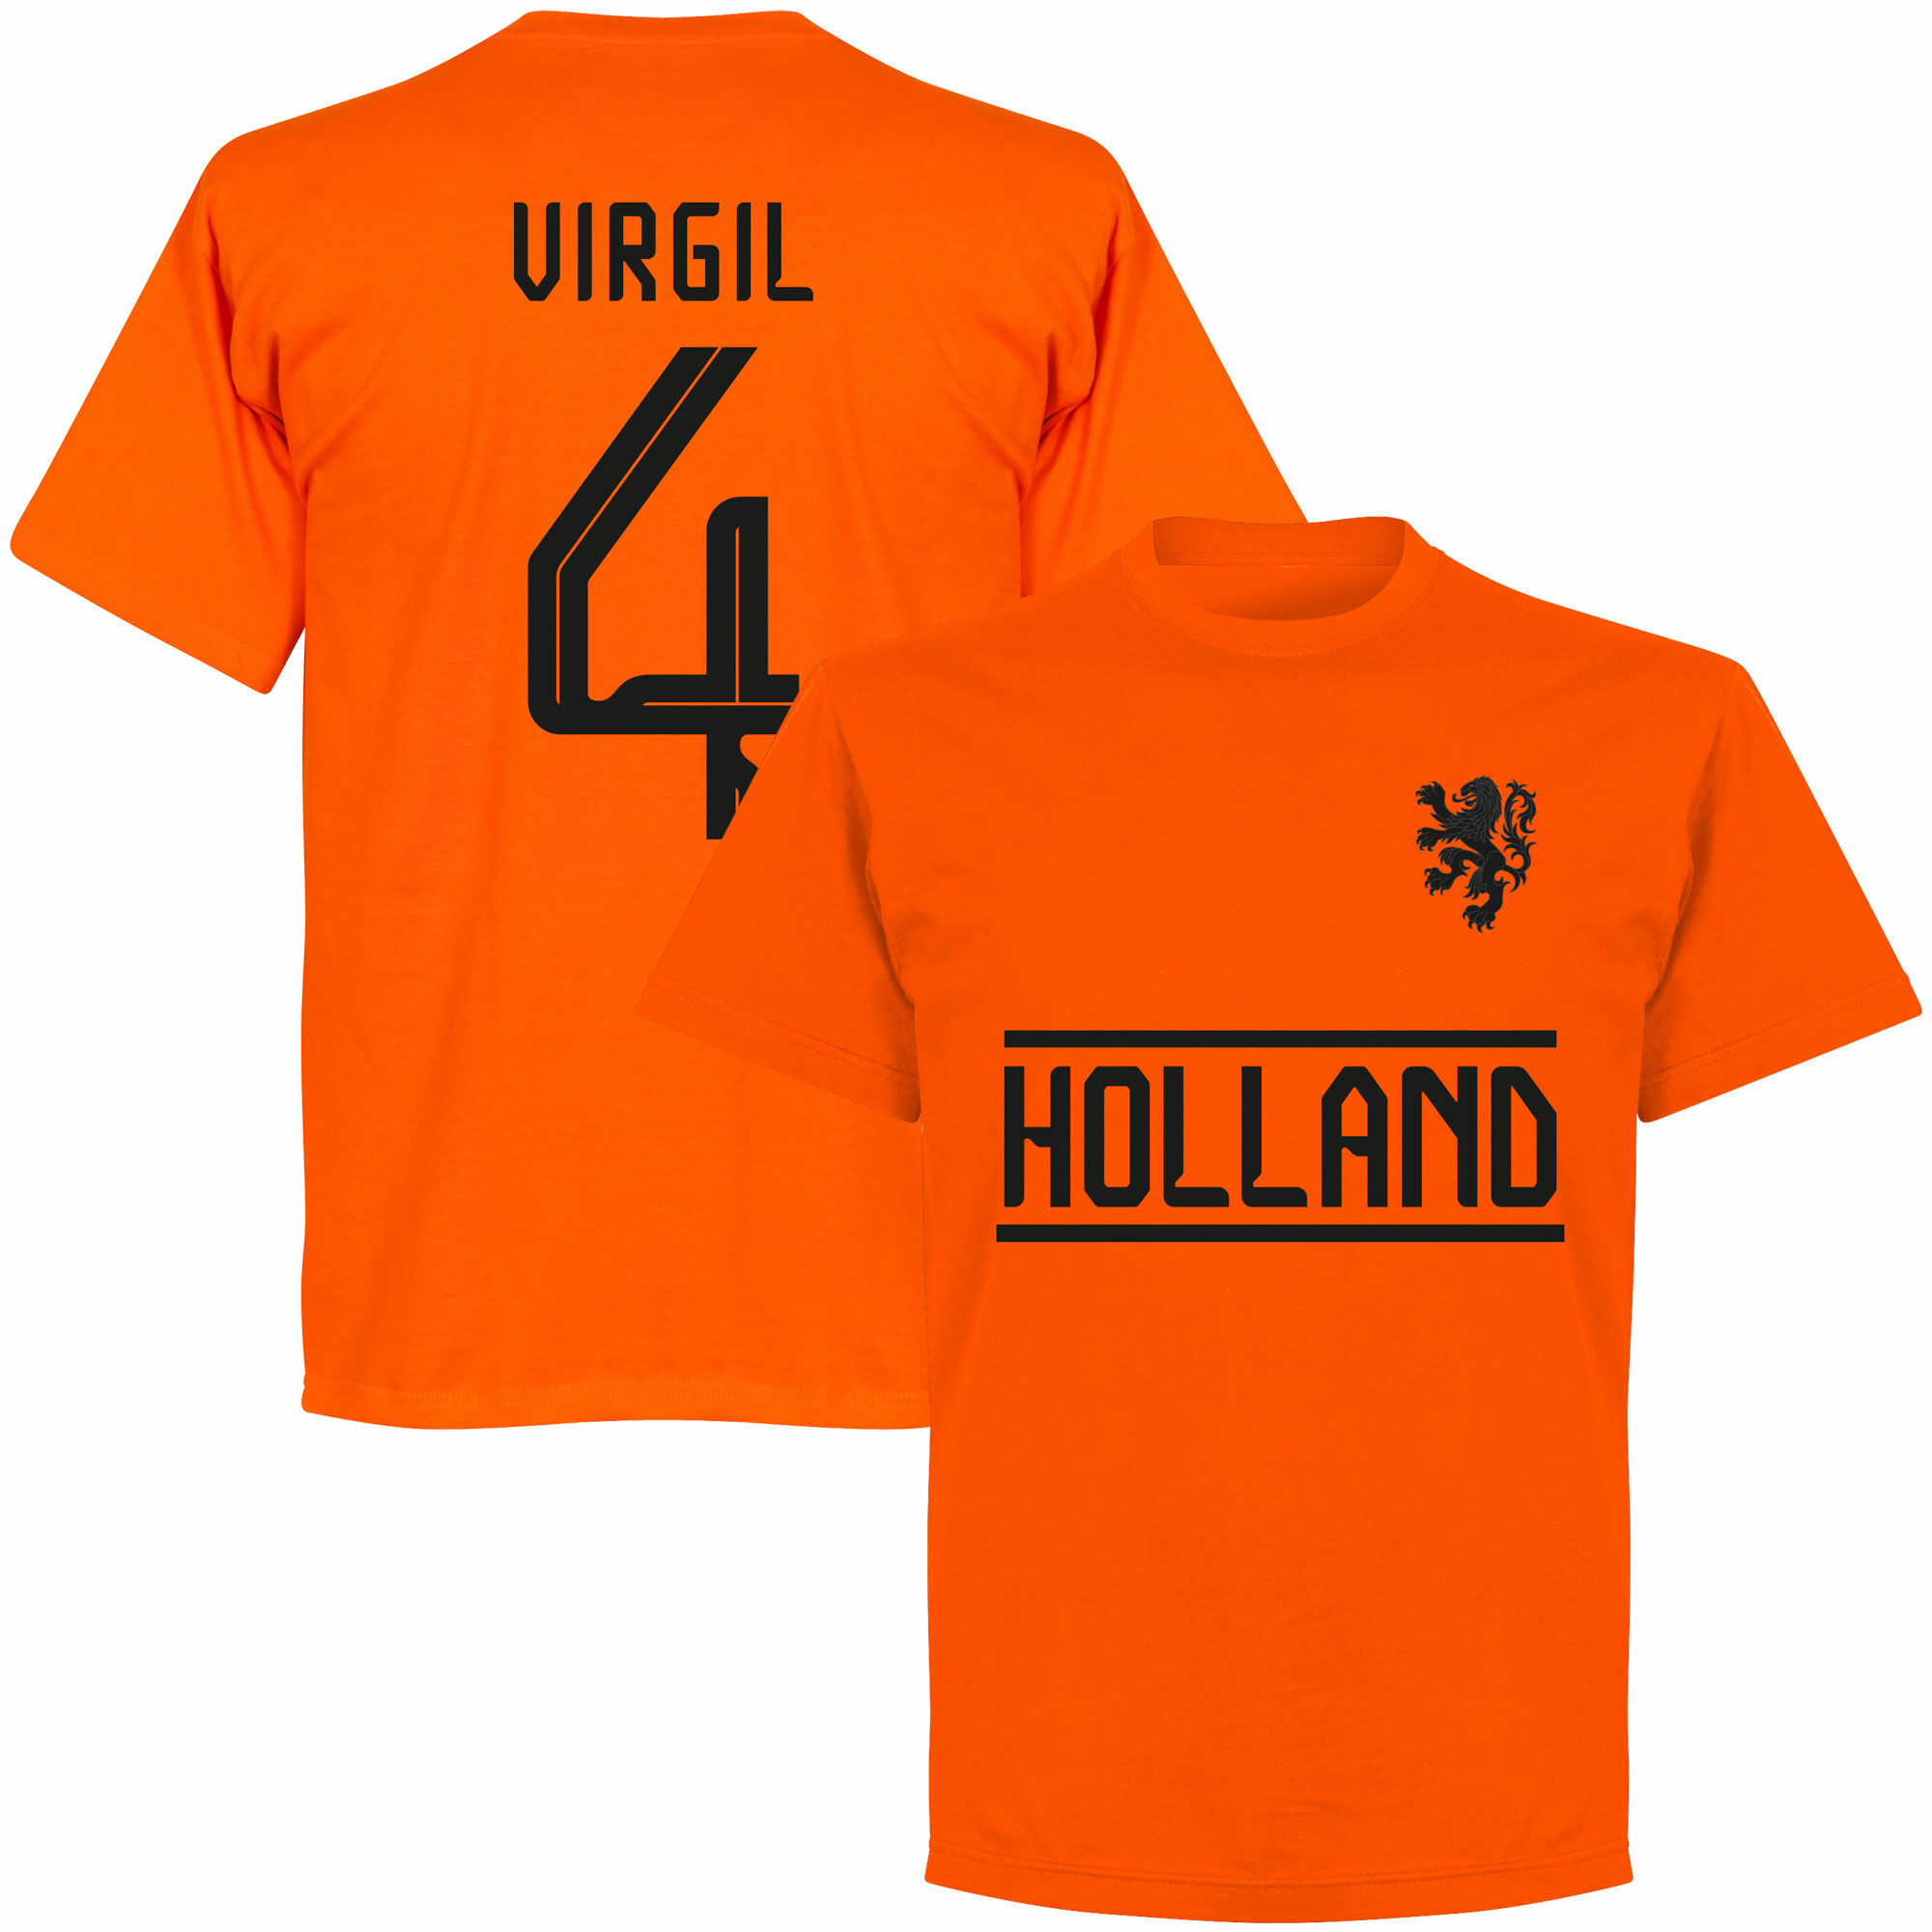 Nizozemí - Tričko - oranžové, číslo 4, Virgil van Dijk